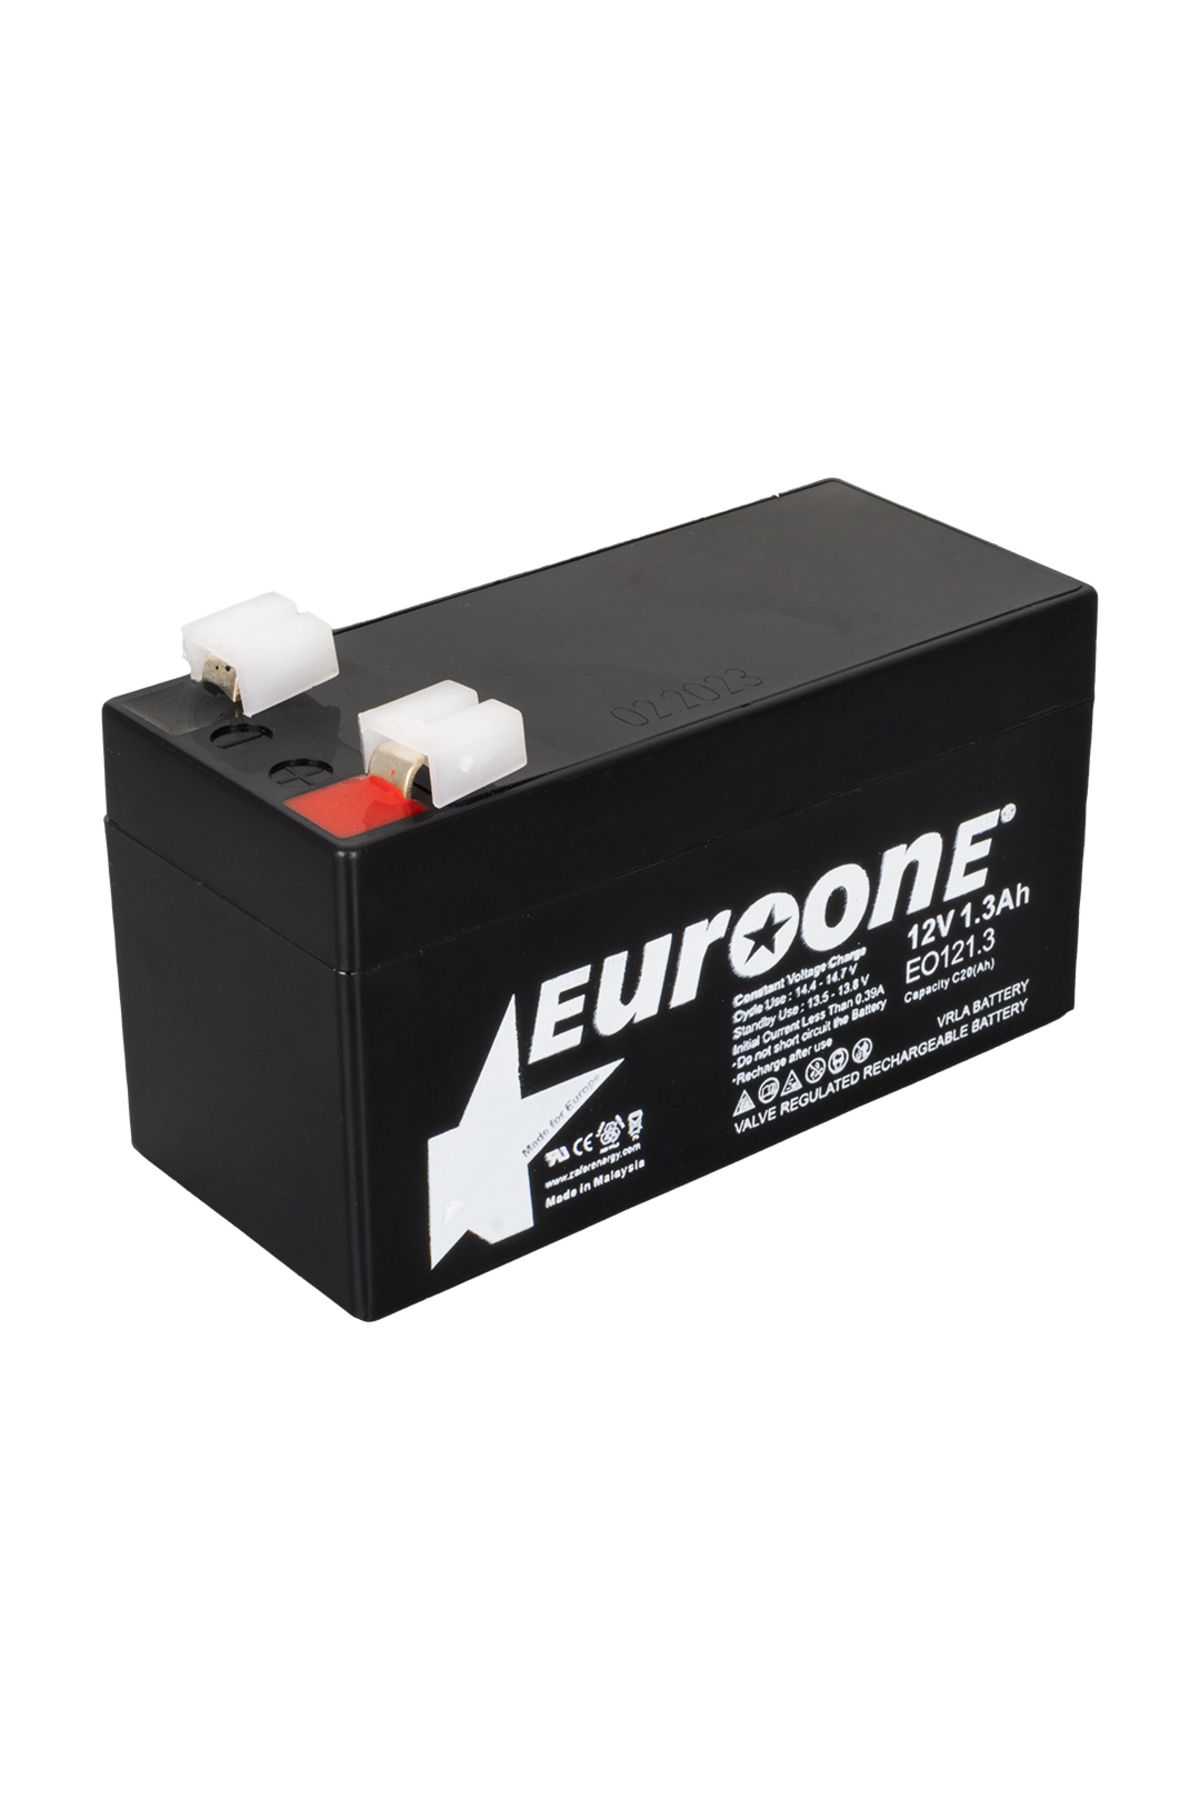 EUROONE Eo121.3 12 Volt - 1.3 Amper Akü (96 X 42 X 52 MM)